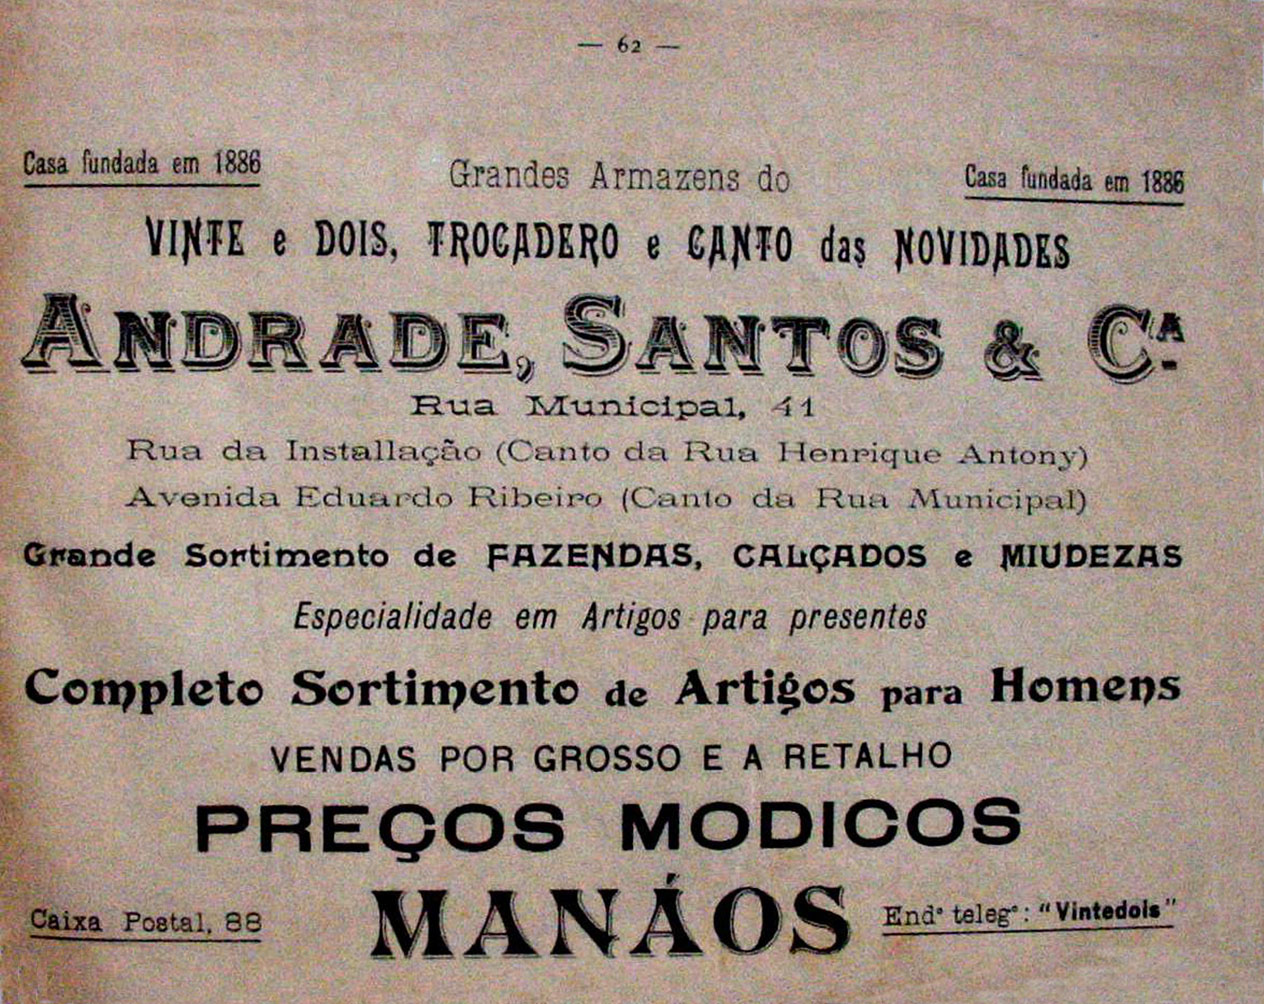 Propaganda da Loja Andrade, Santos & Cia